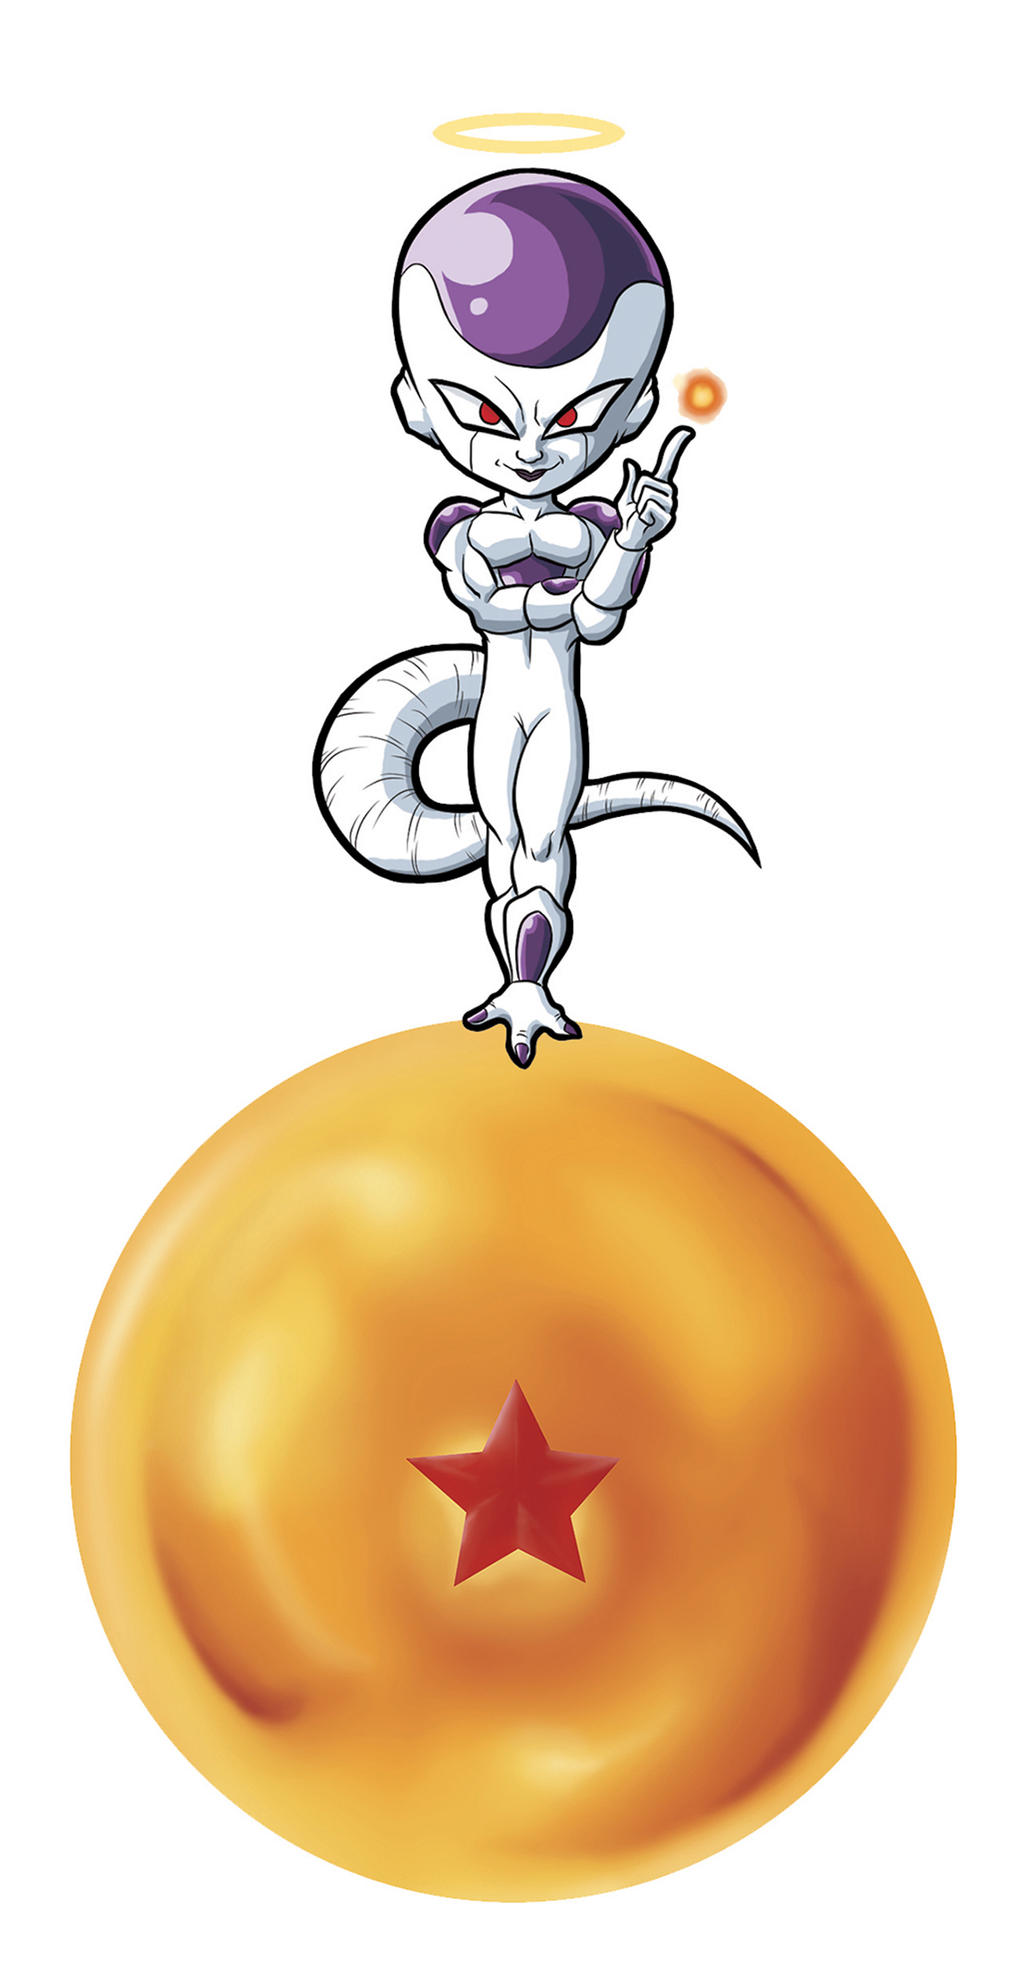 Dragon Ball - Freeza Chibi by GSK-Desenhos on DeviantArt